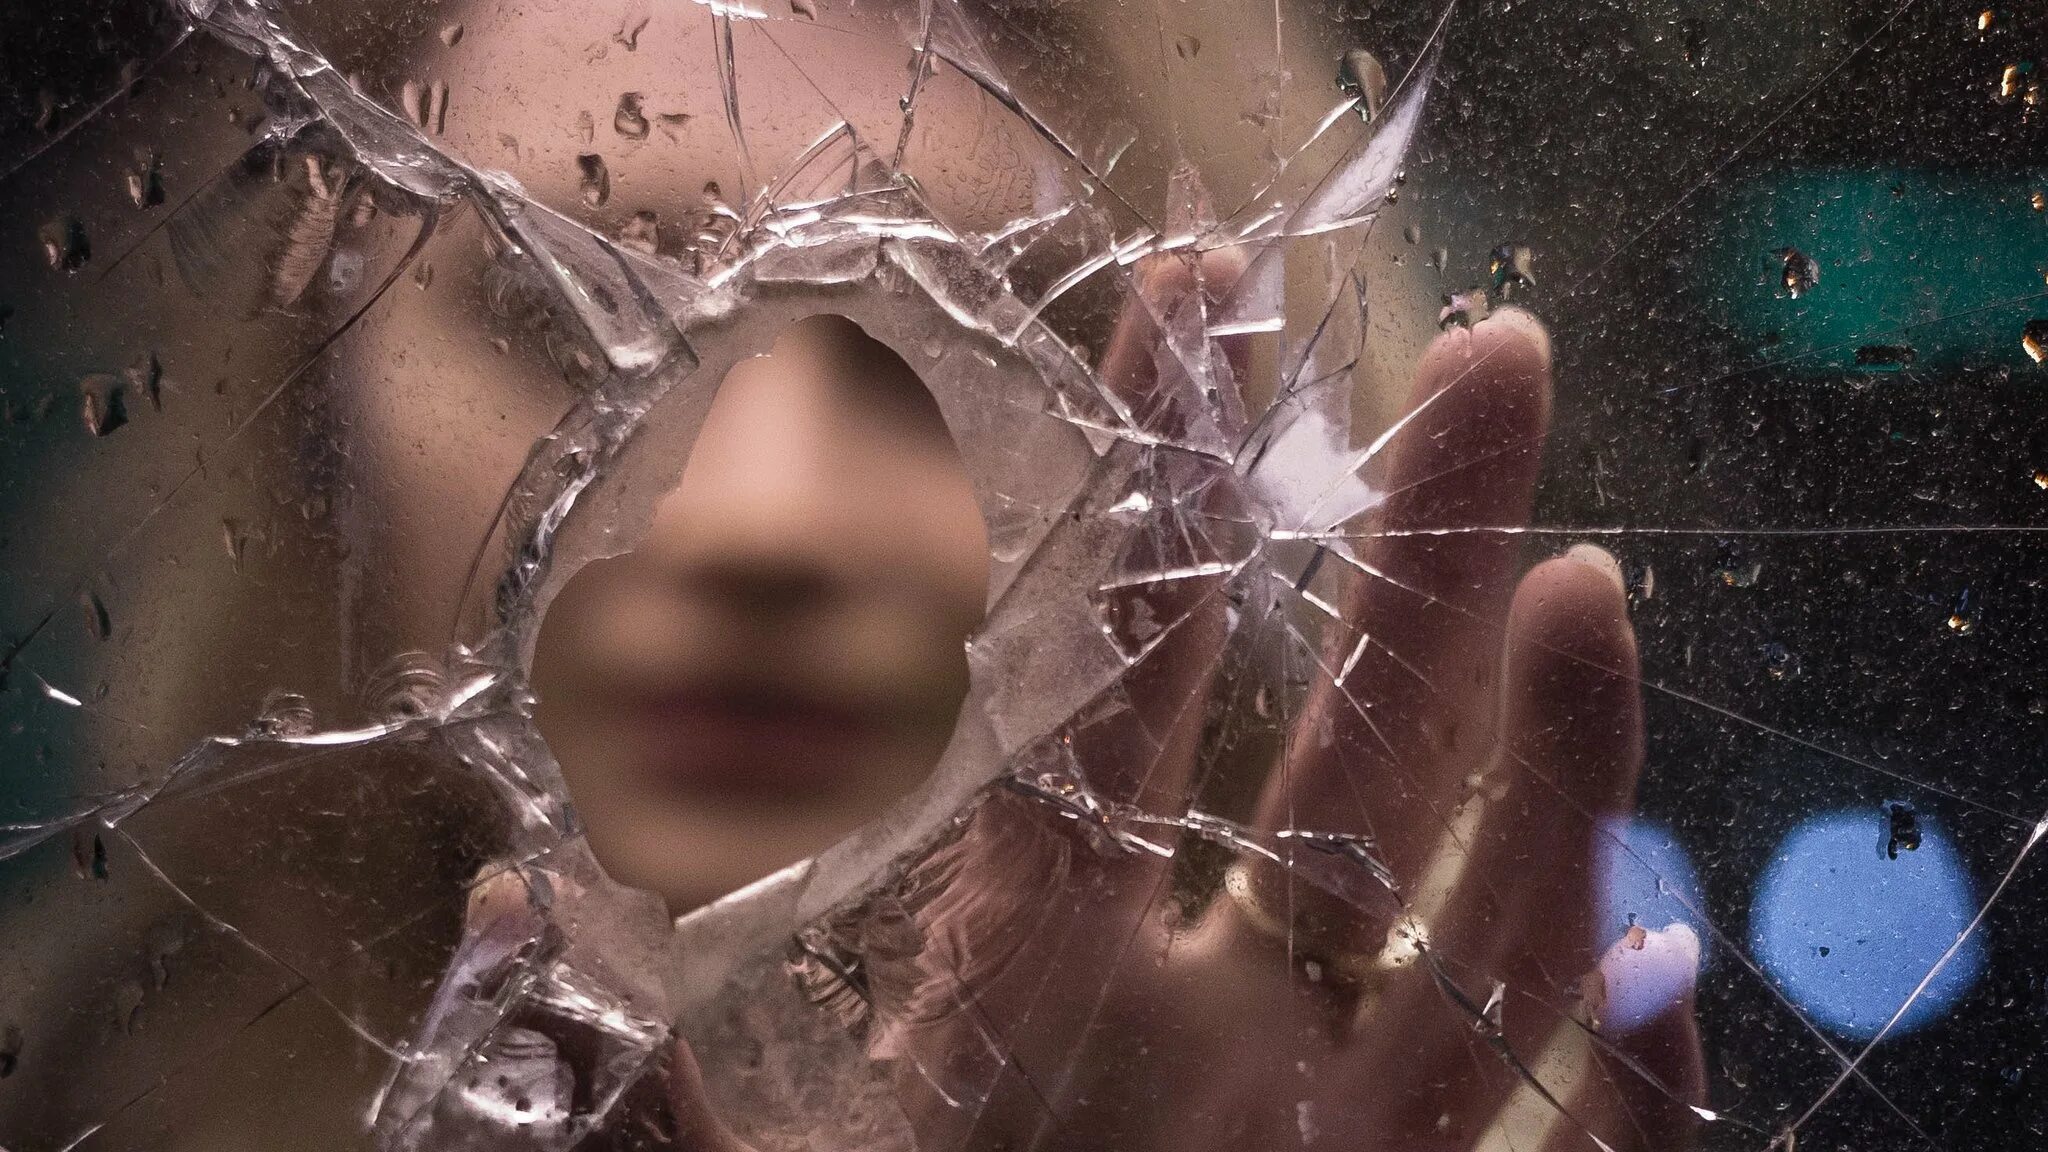 Разбитое стекло. Девушка в разбитом зеркале. Фотосессия с разбитым стеклом. Разбитые отражения фф